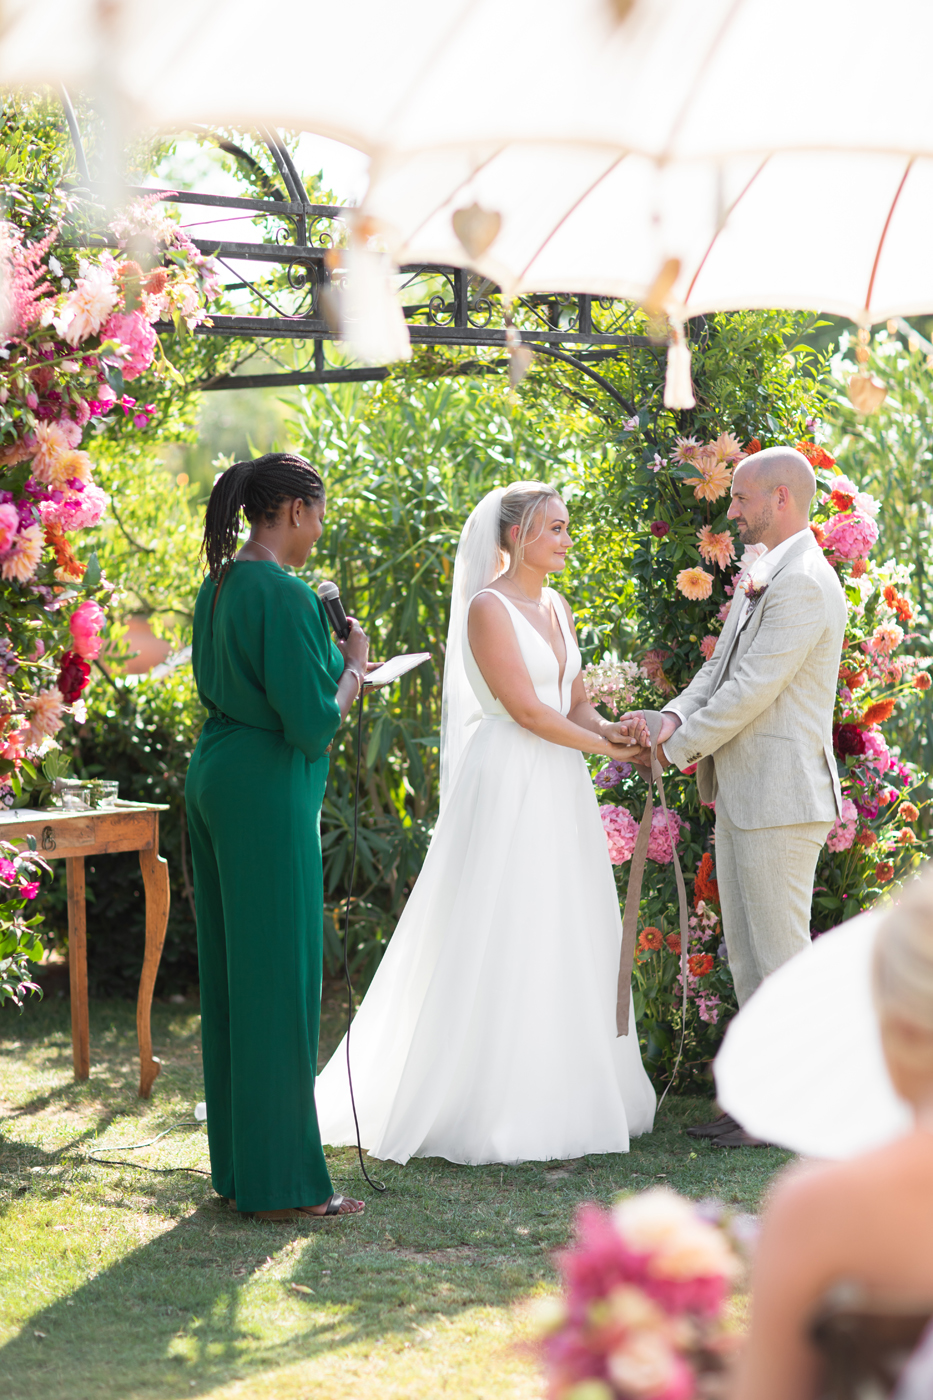 Wedding ceremony at Finca Monasterio